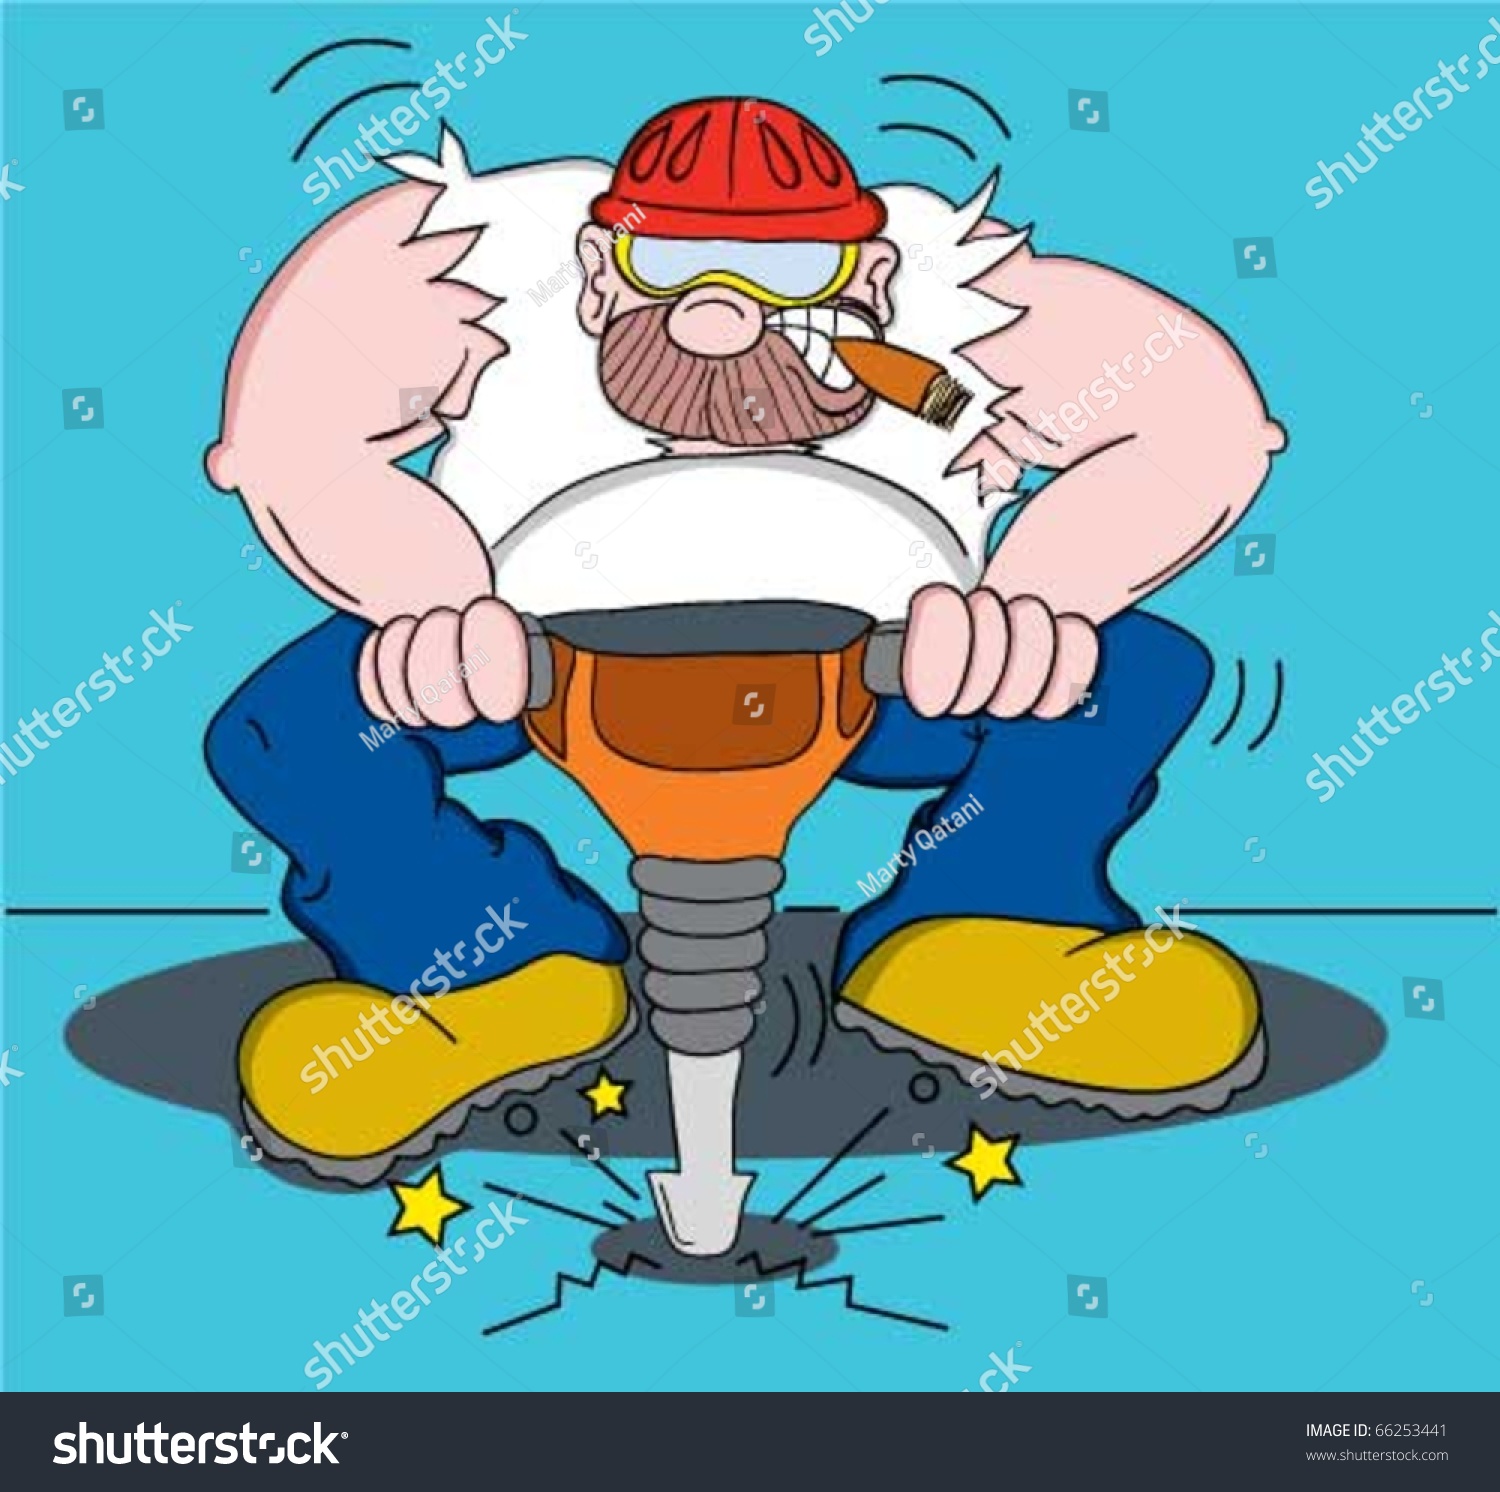 Cartoon Illustration Of A Rugged Construction Worker Using A Jackhammer 66253441 Shutterstock 2159